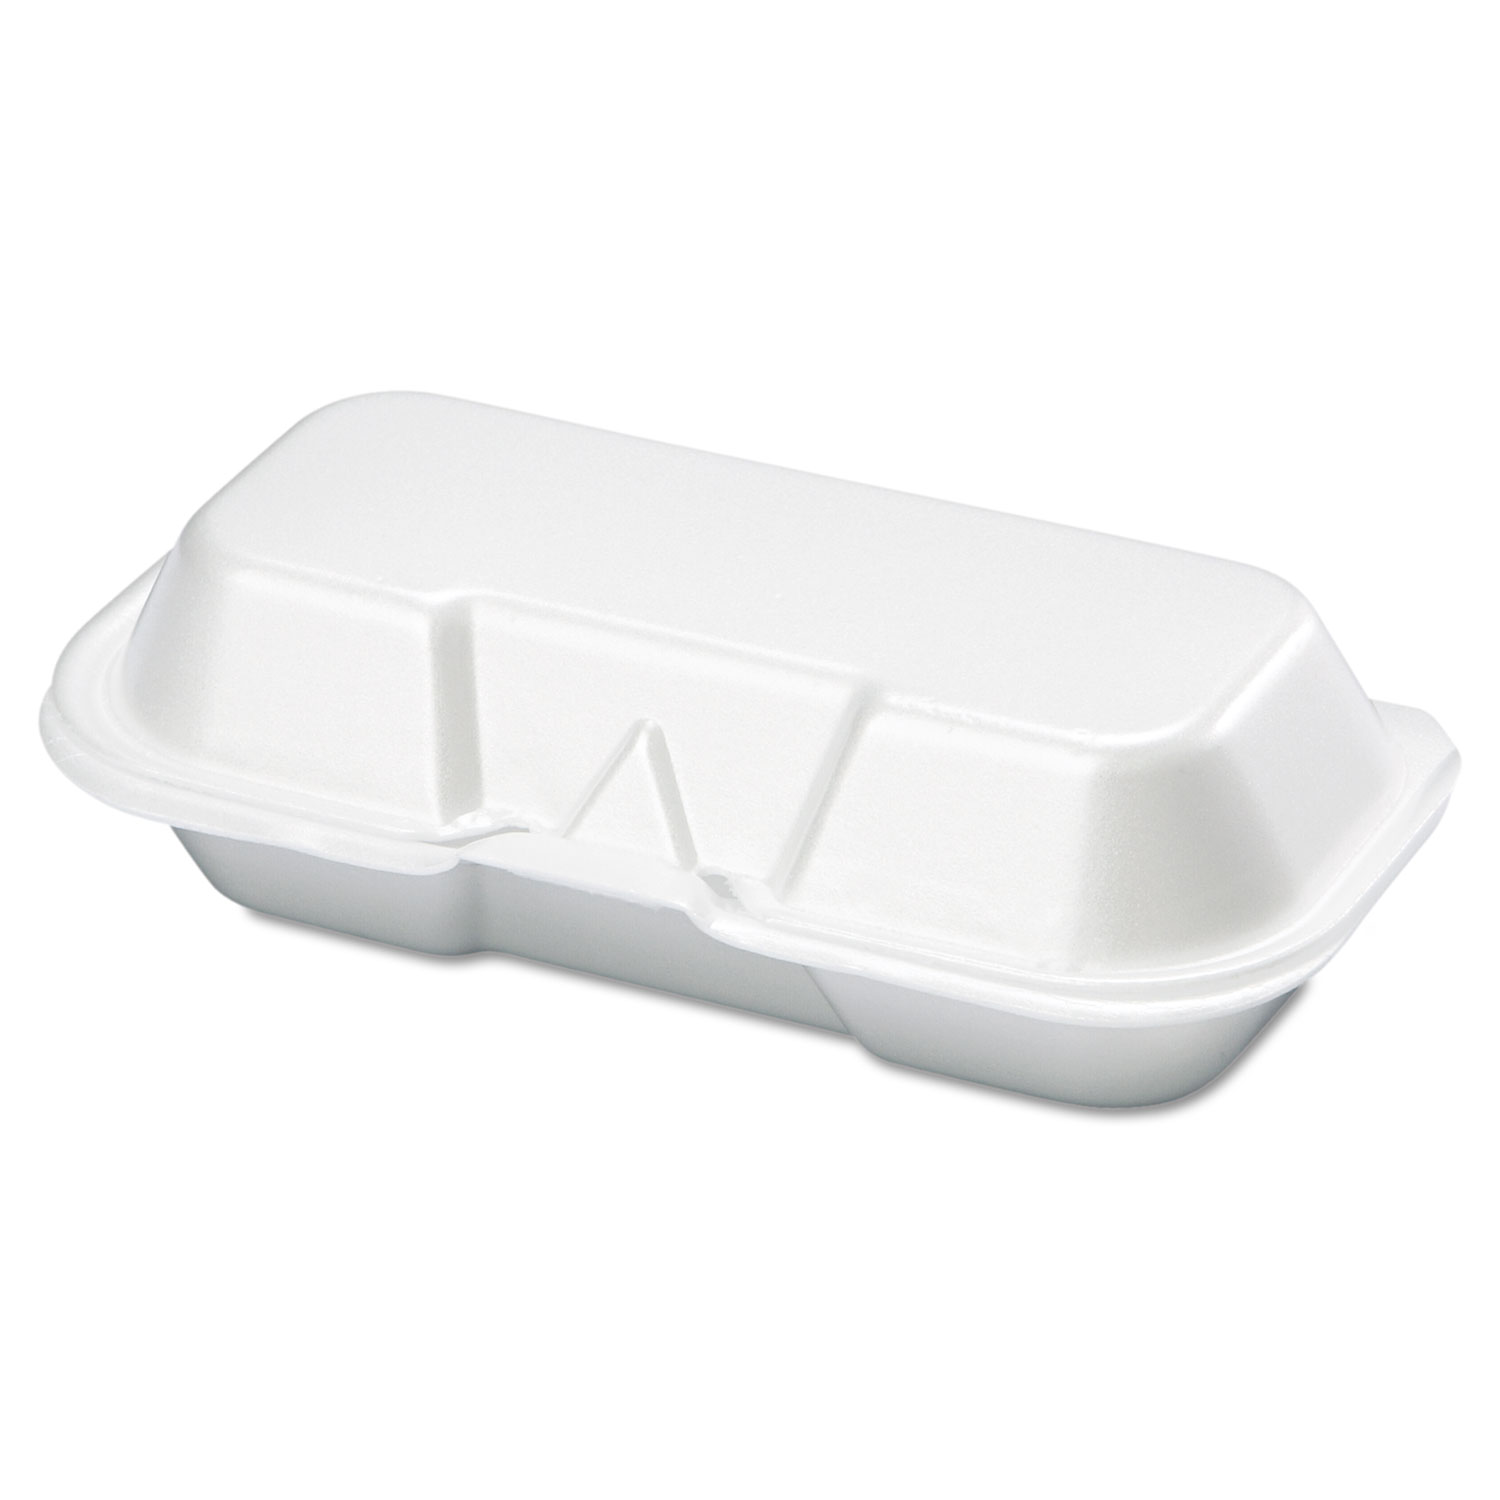  Genpak 21100--- Foam Hot Dog Container, 7 3/8 x 3 9/16 x 2 1/4, White, 125/Bag, 4 Bags/Carton (GNP21100) 